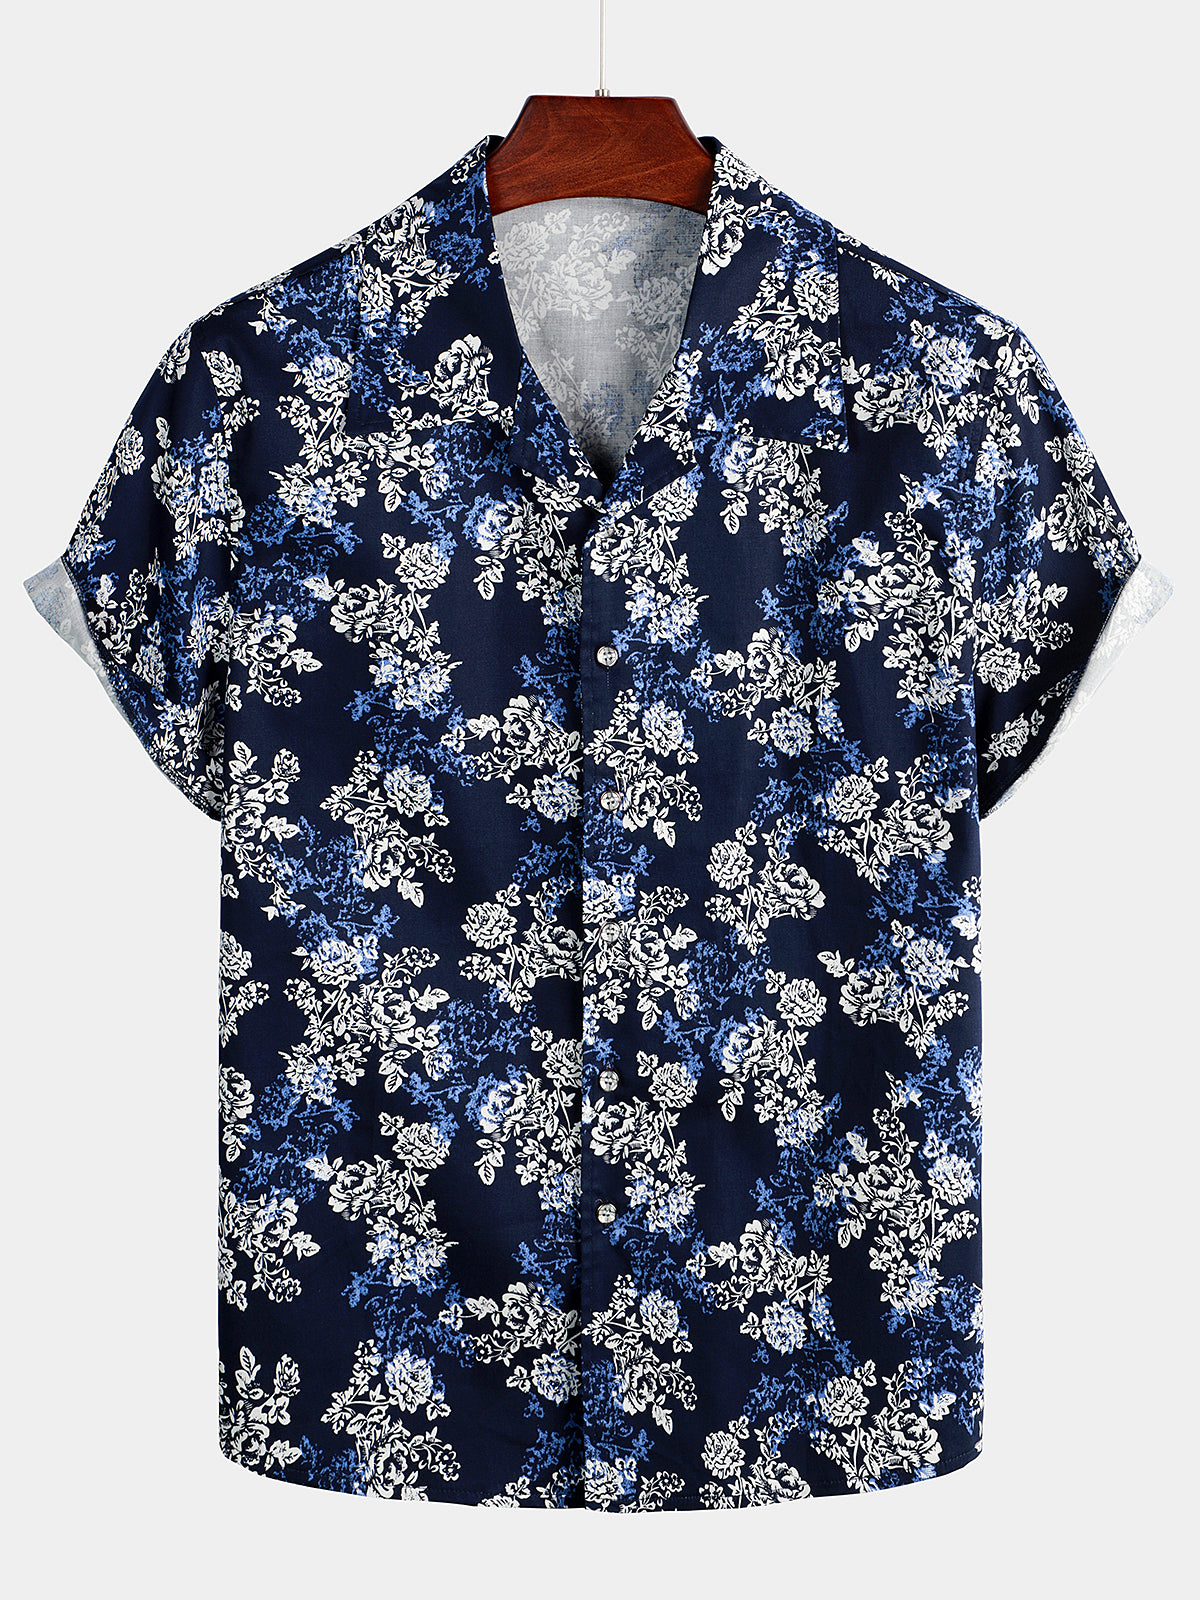 Men's Floral Cotton Tropical Hawaiian Navy Blue Shirt